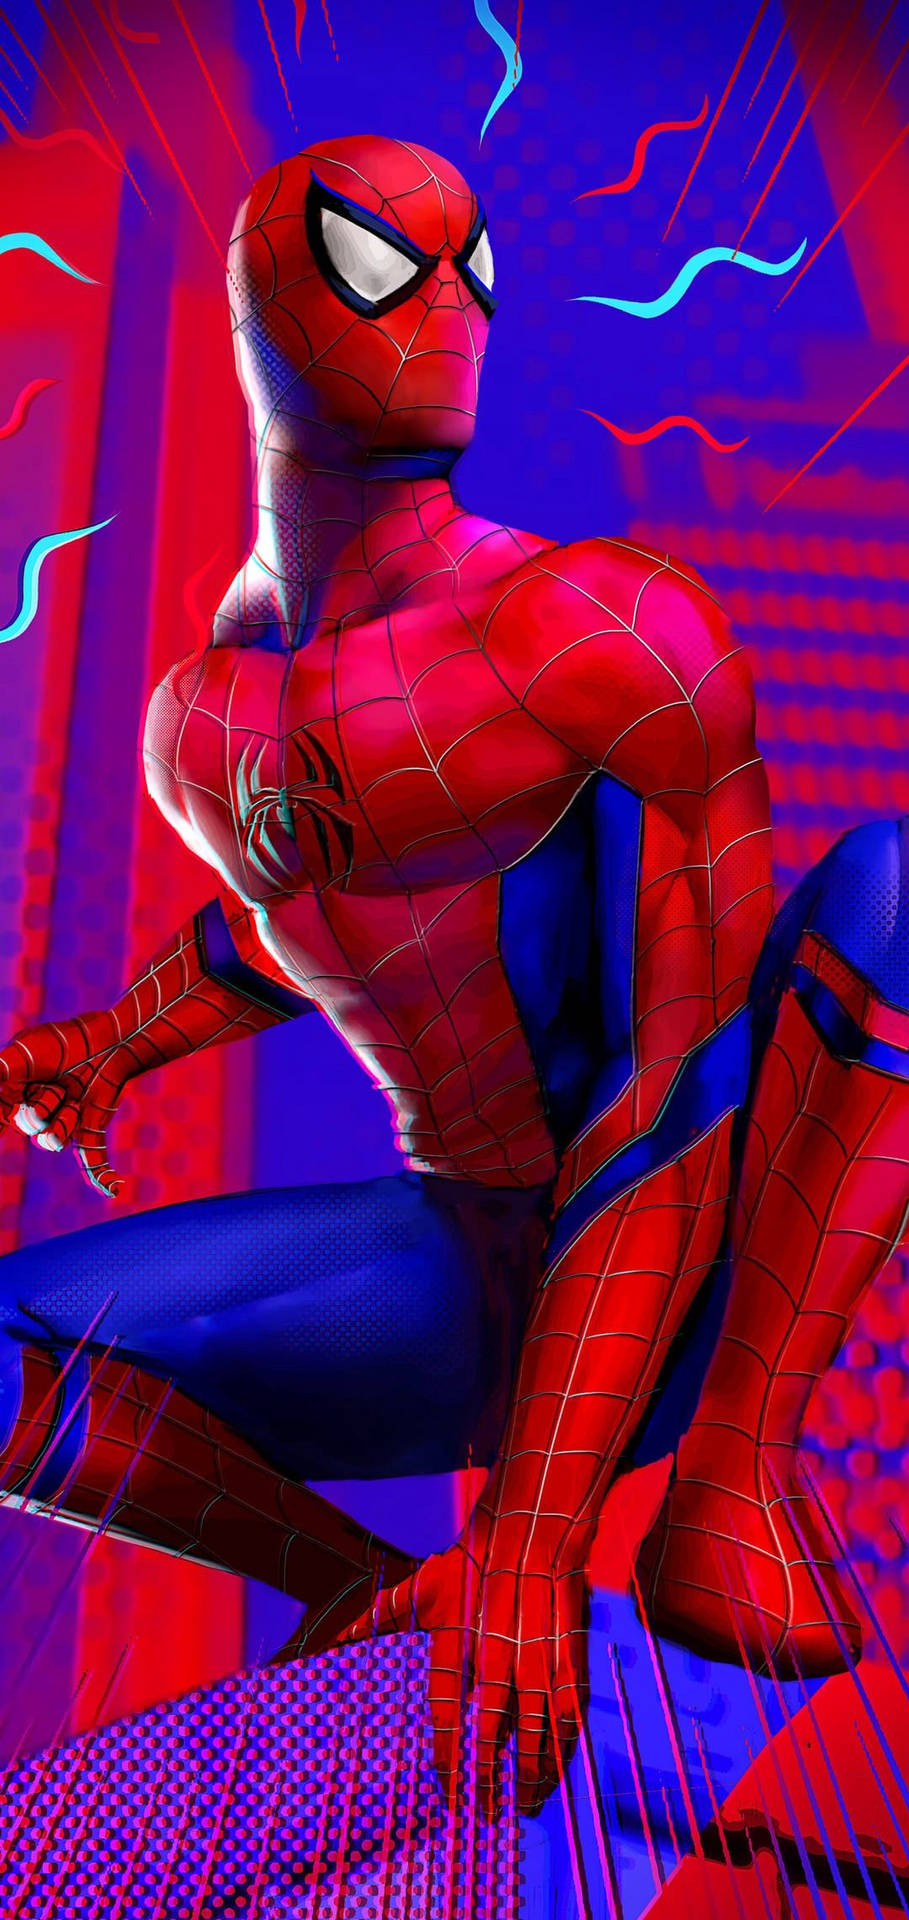 Spiderman taking a break from saving the world Wallpaper